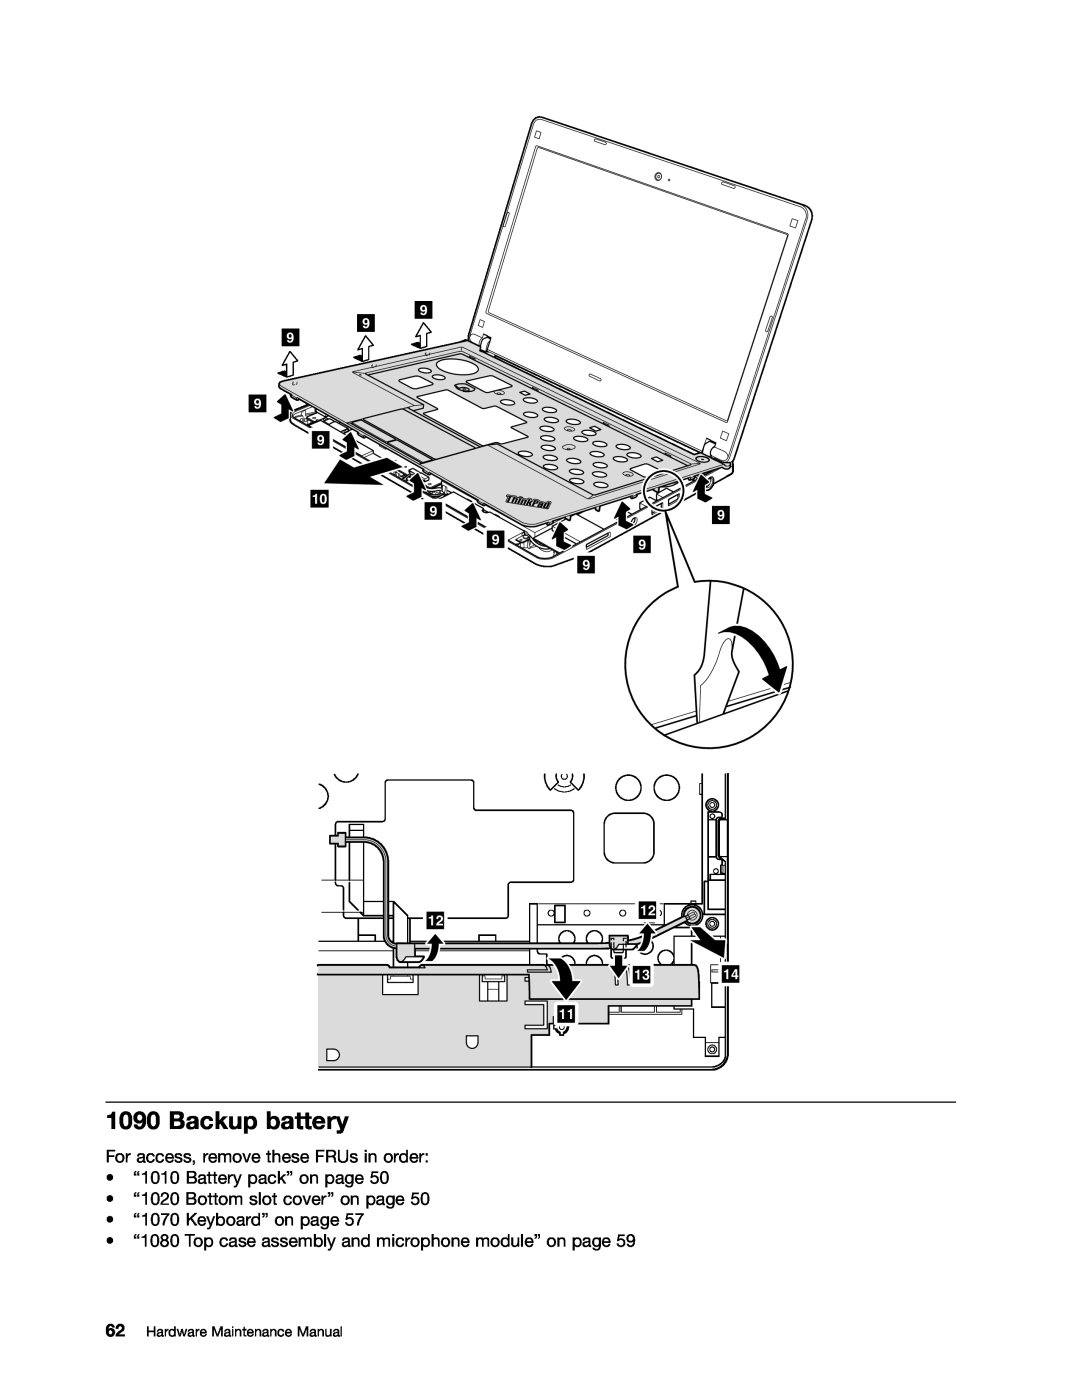 Lenovo EDGE 13, E31, E30 manual Backup battery, Hardware Maintenance Manual 